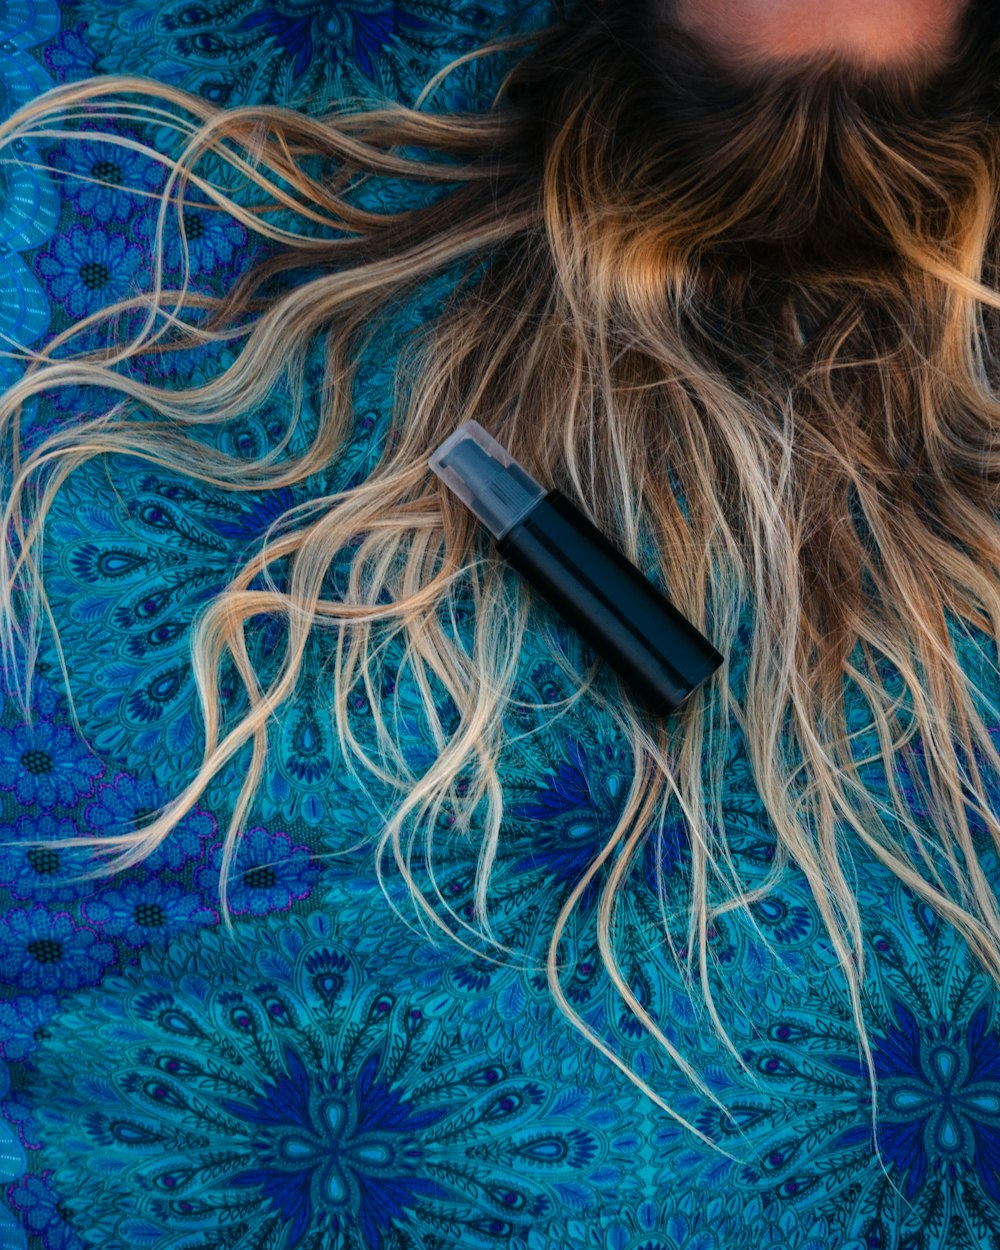 mujer acostada sobre tela floral azul